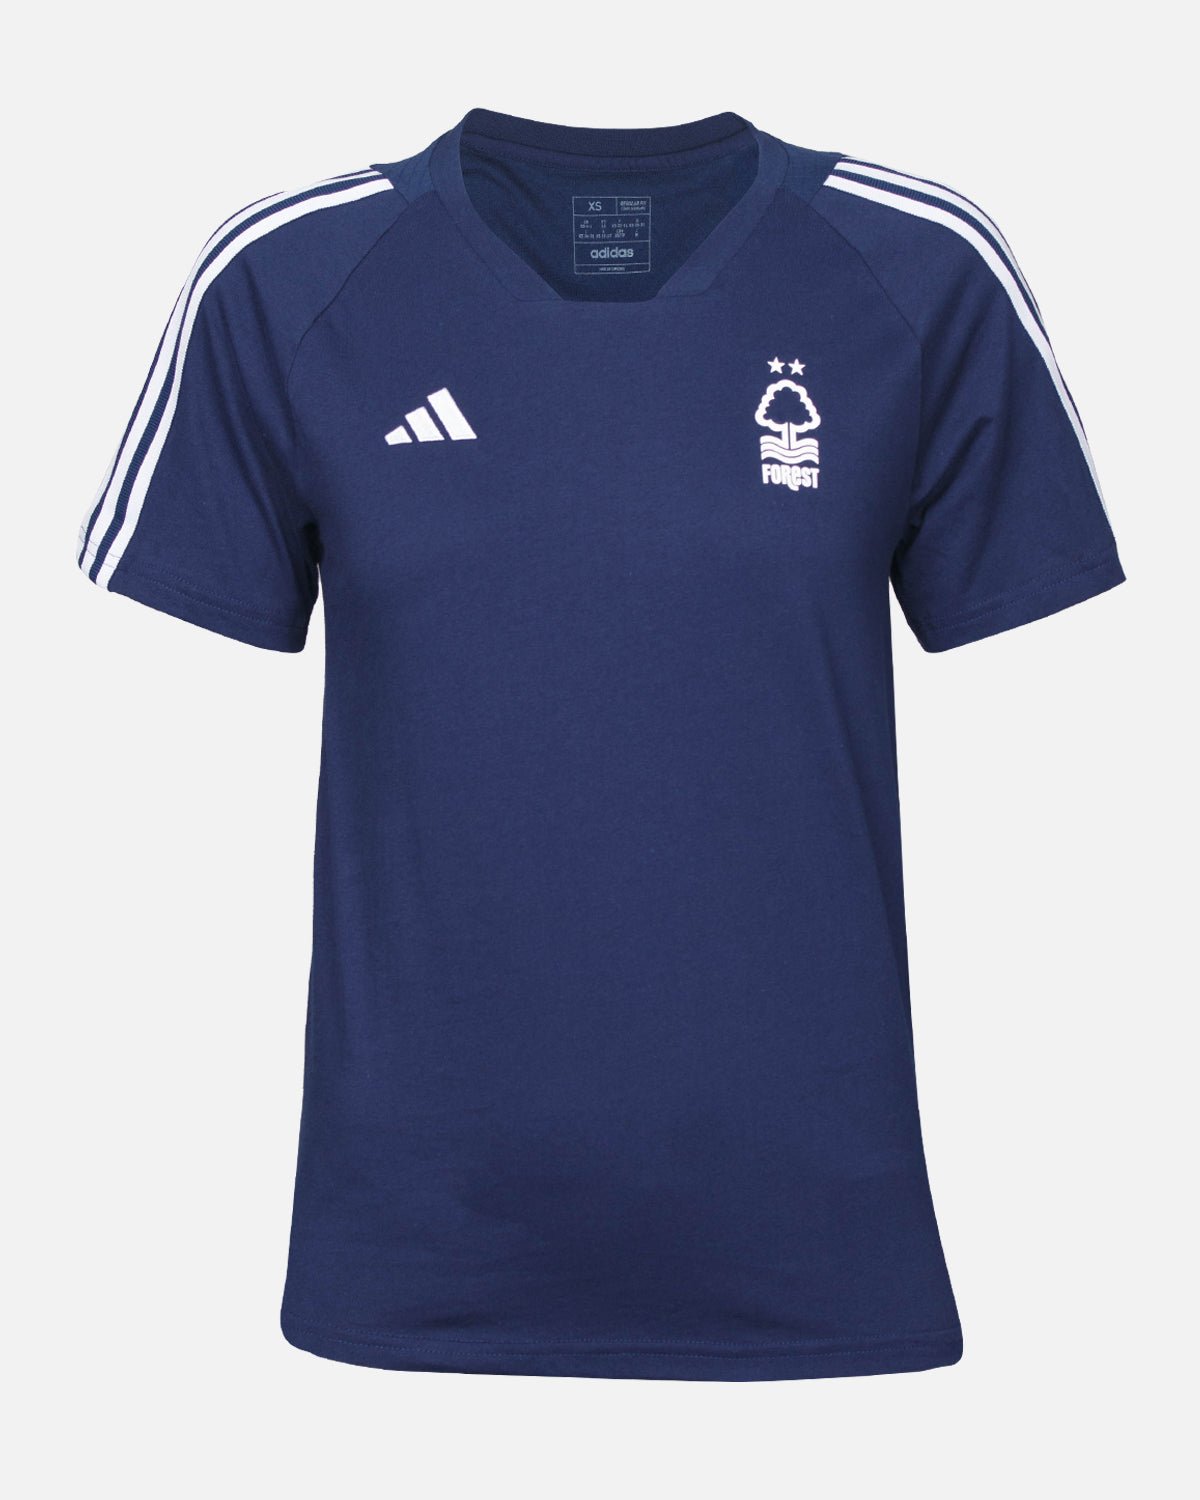 NFFC Women's Navy Travel T-Shirt 23-24 - Nottingham Forest FC